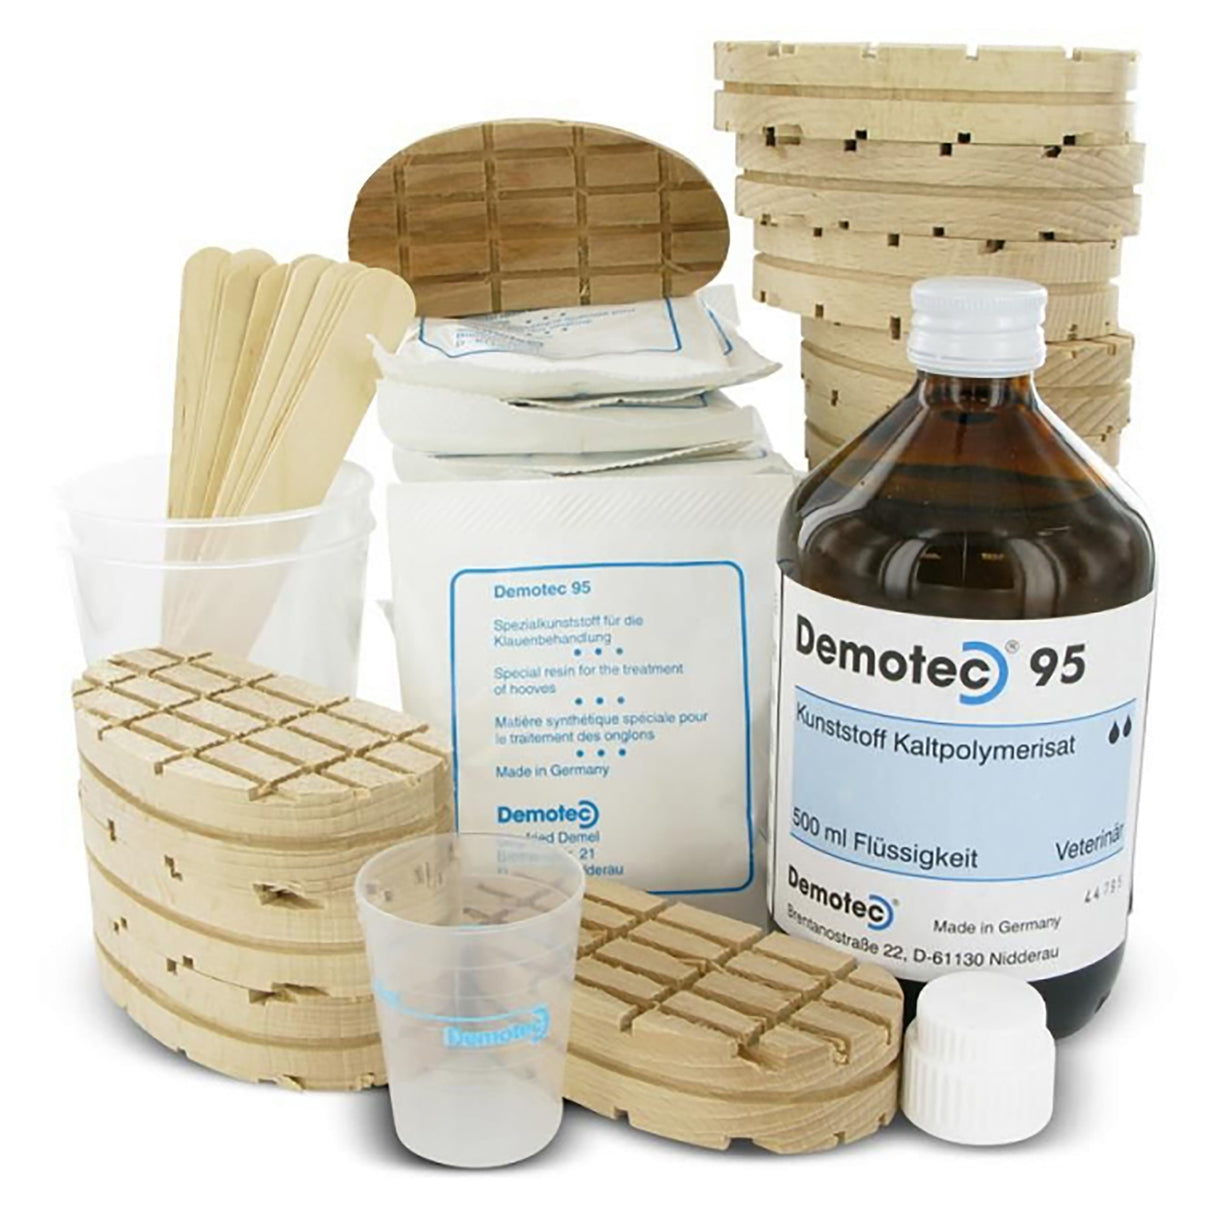 Demotec 95 - 14 treatment set